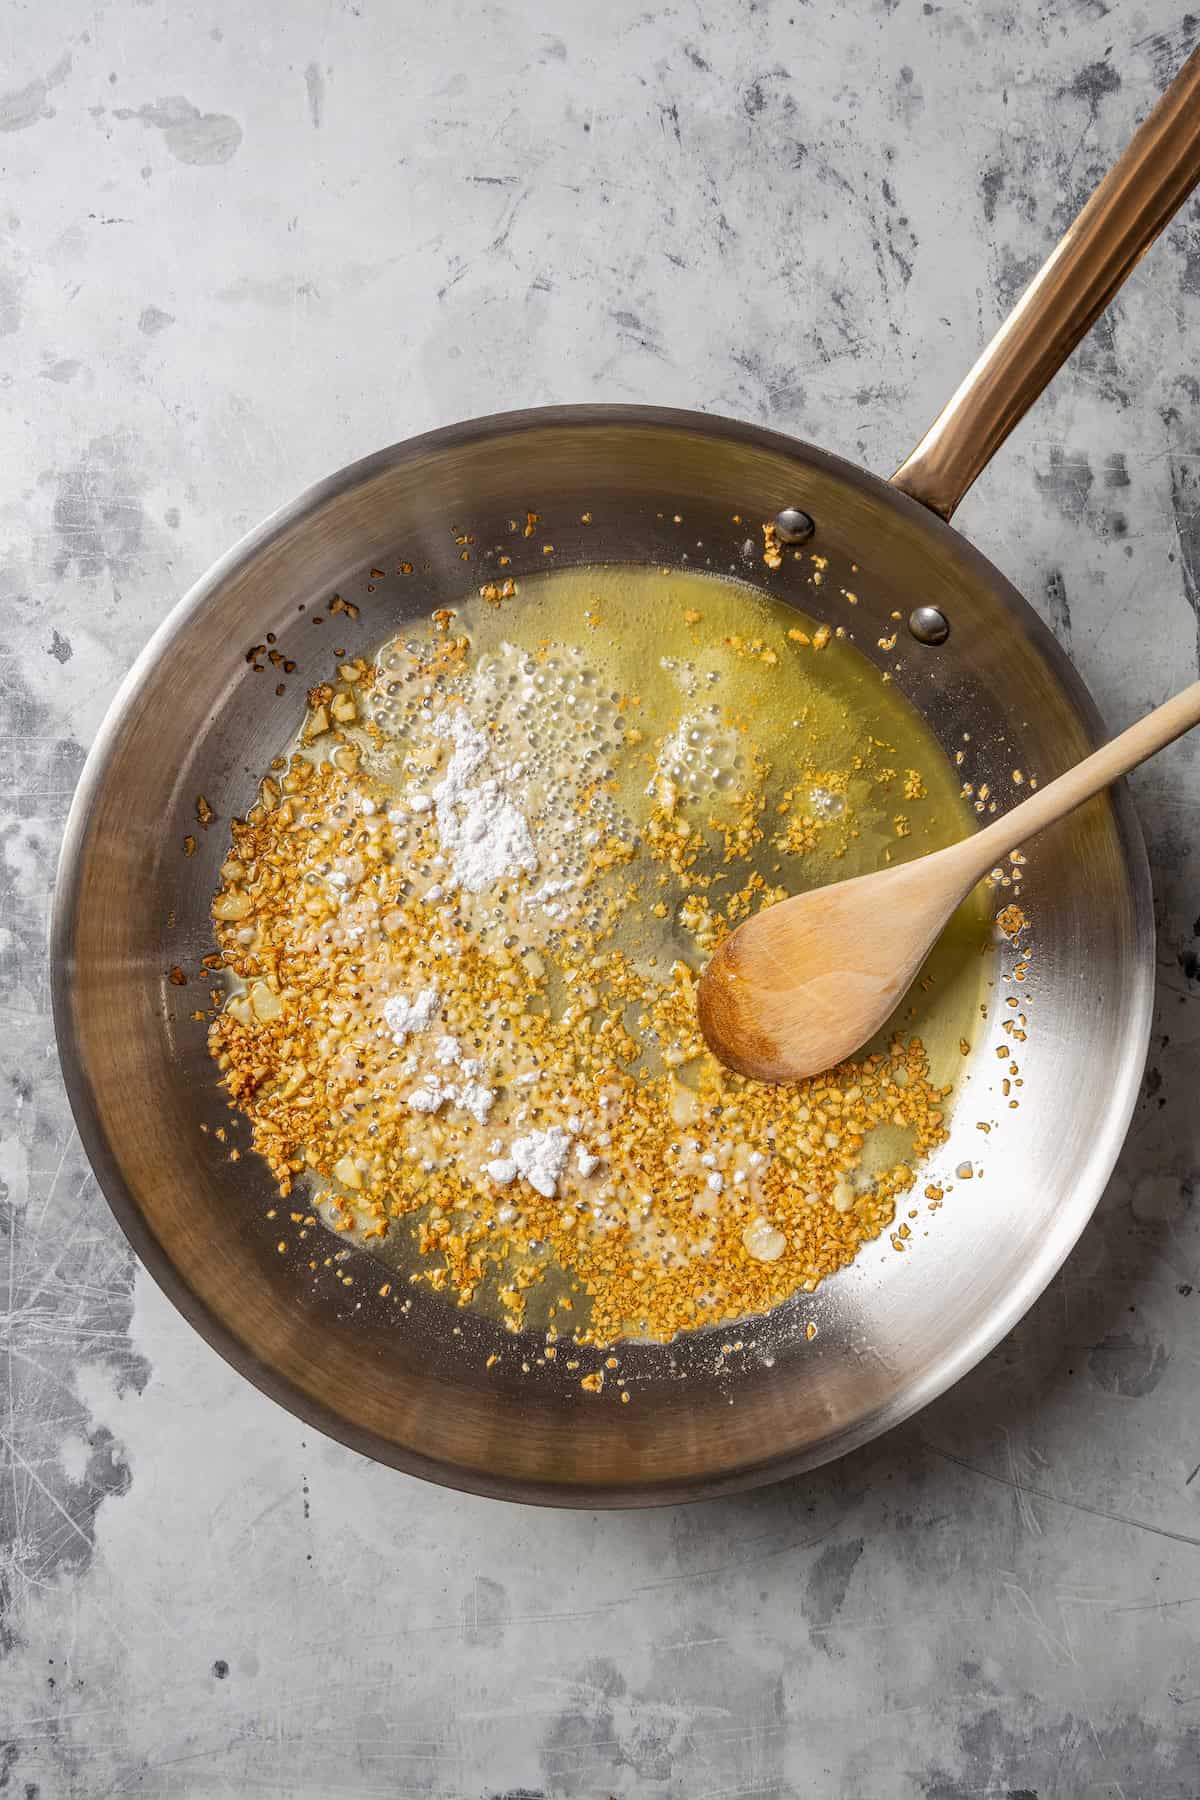 Flour stirred into sautéed garlic in a saucepan to make a roux.